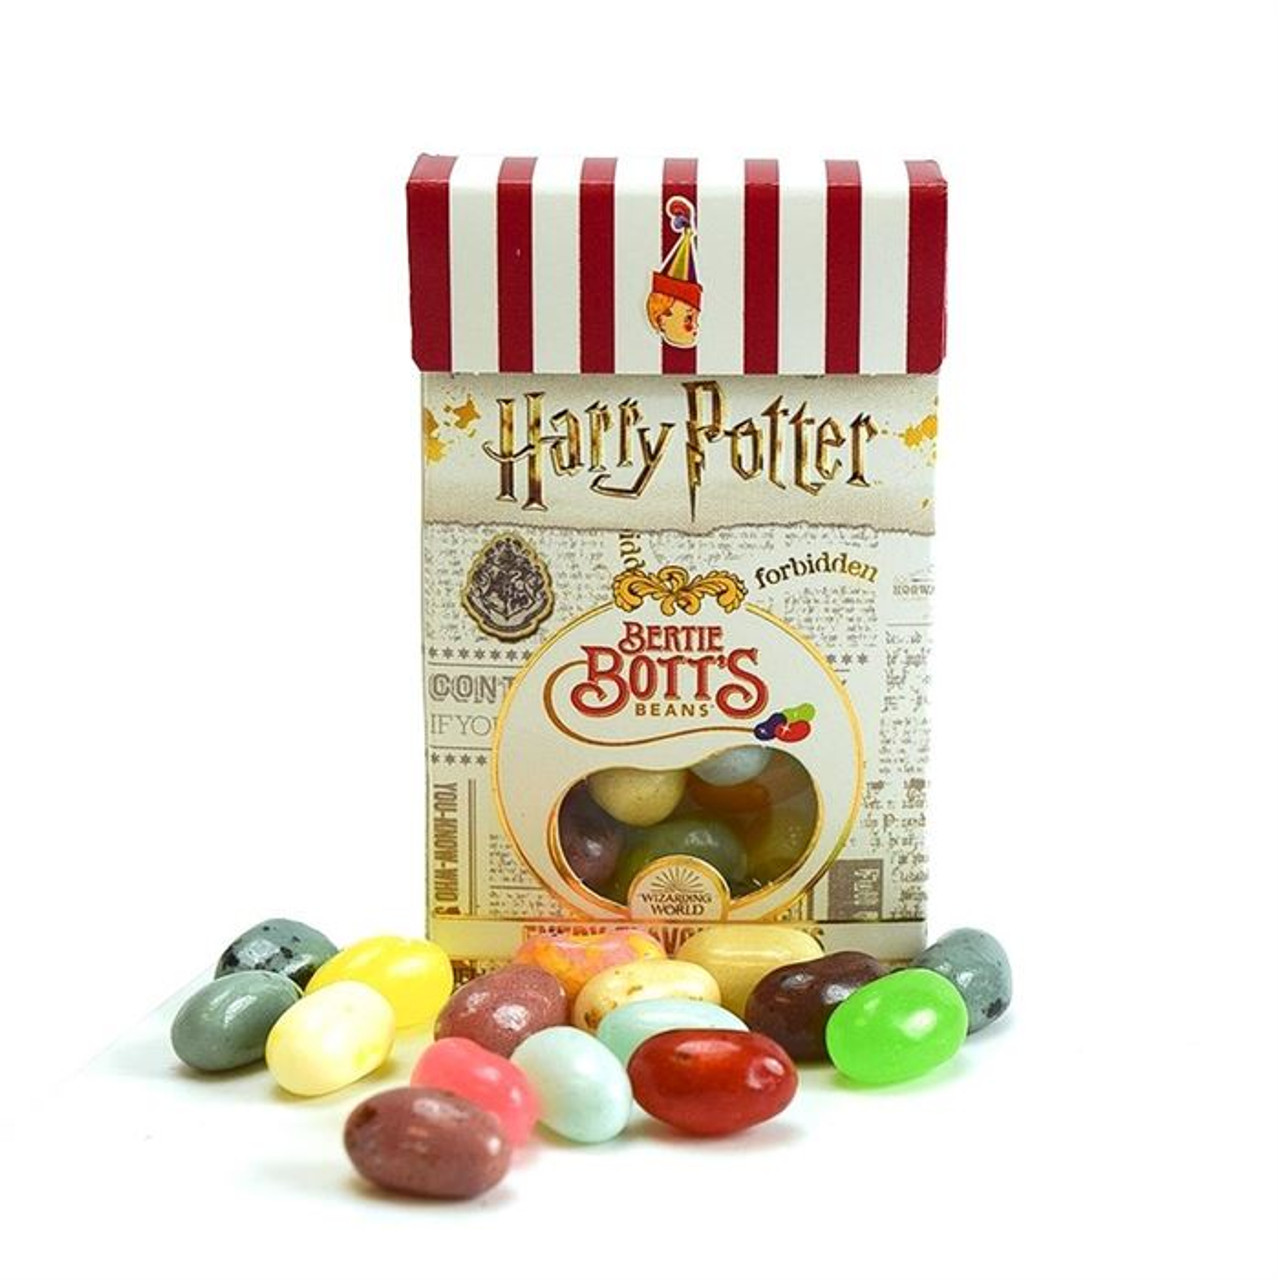 Jelly Belly Harry Potter Bertie Bott's Beans - 1.2 oz box